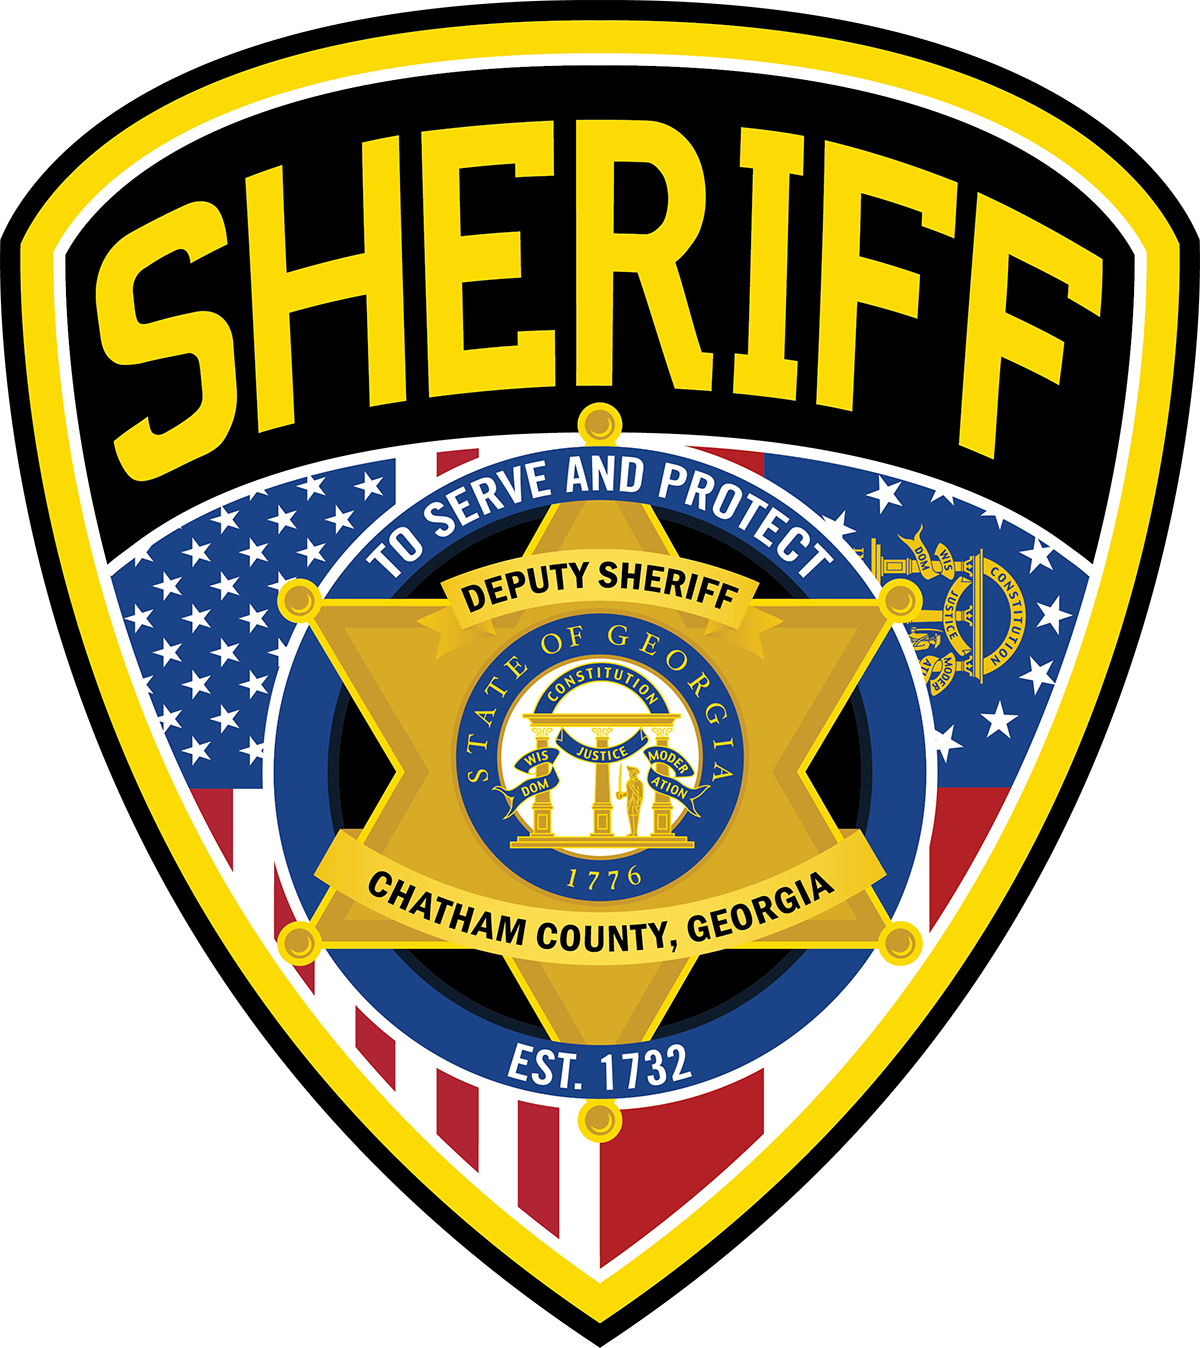 Sheriff Logo